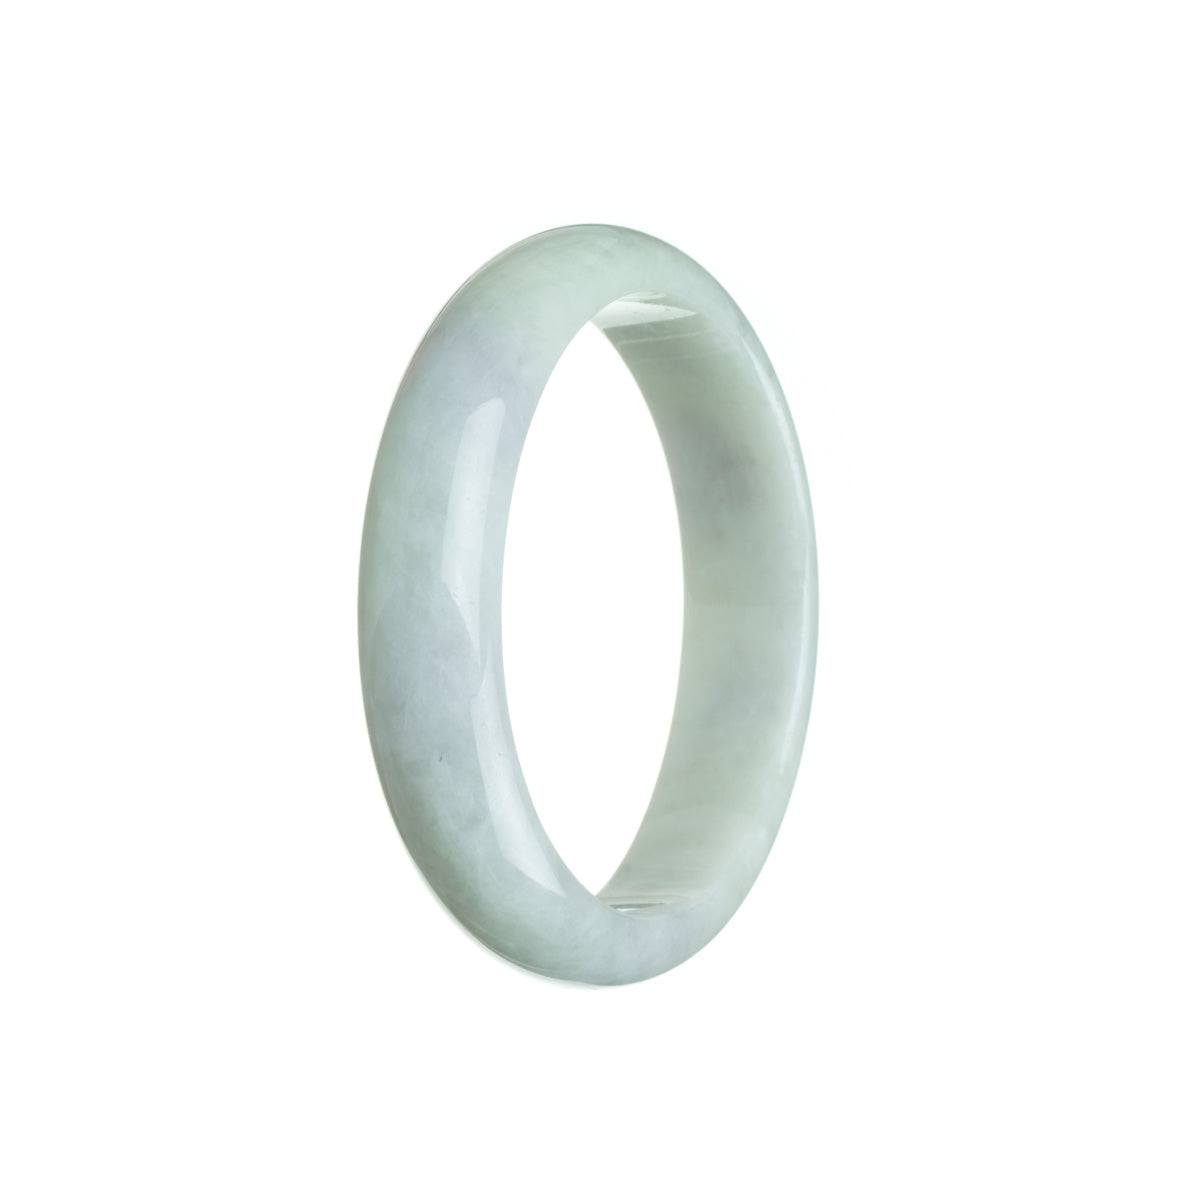 A pale green and lavender jadeite jade bracelet, certified Grade A. The oval-shaped bracelet measures 56mm.